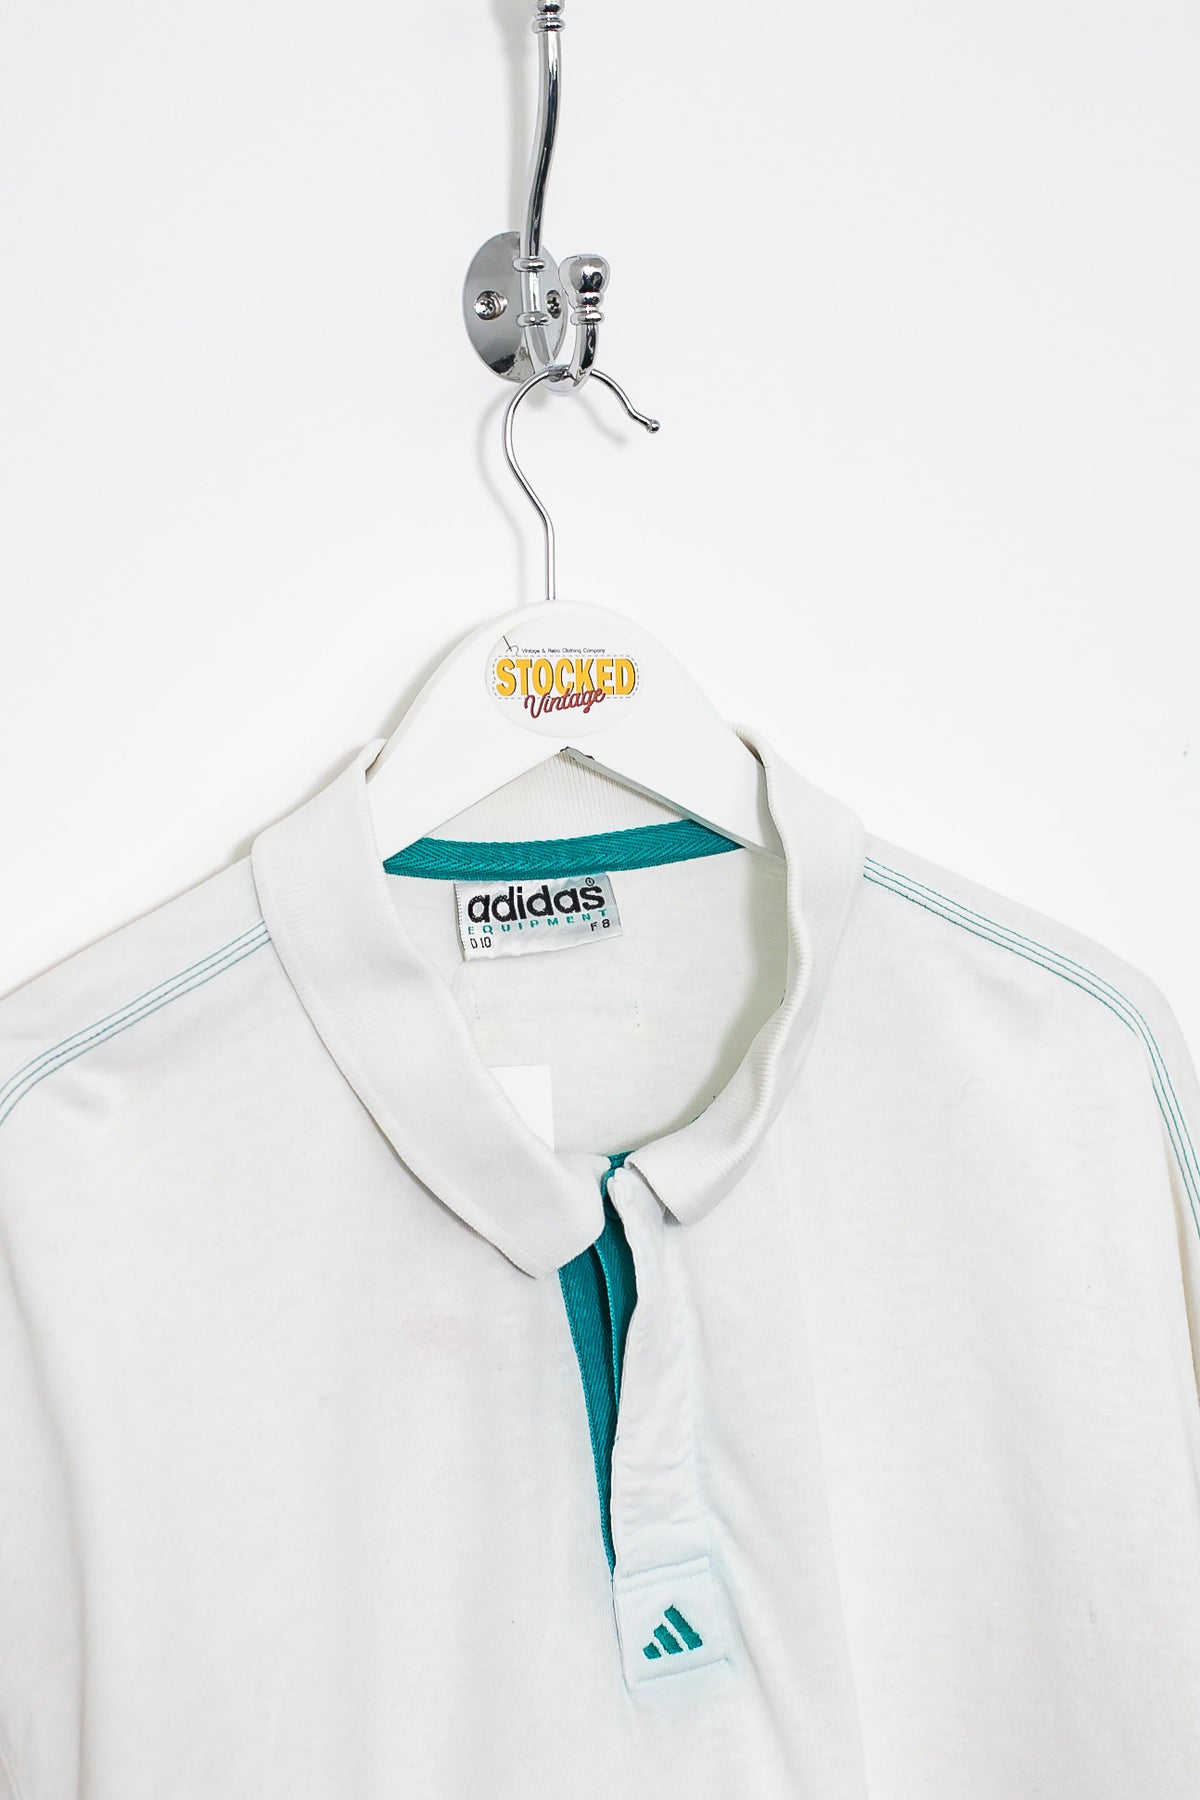 90s Adidas Equipment Long Sleeve Polo Shirt (XL)